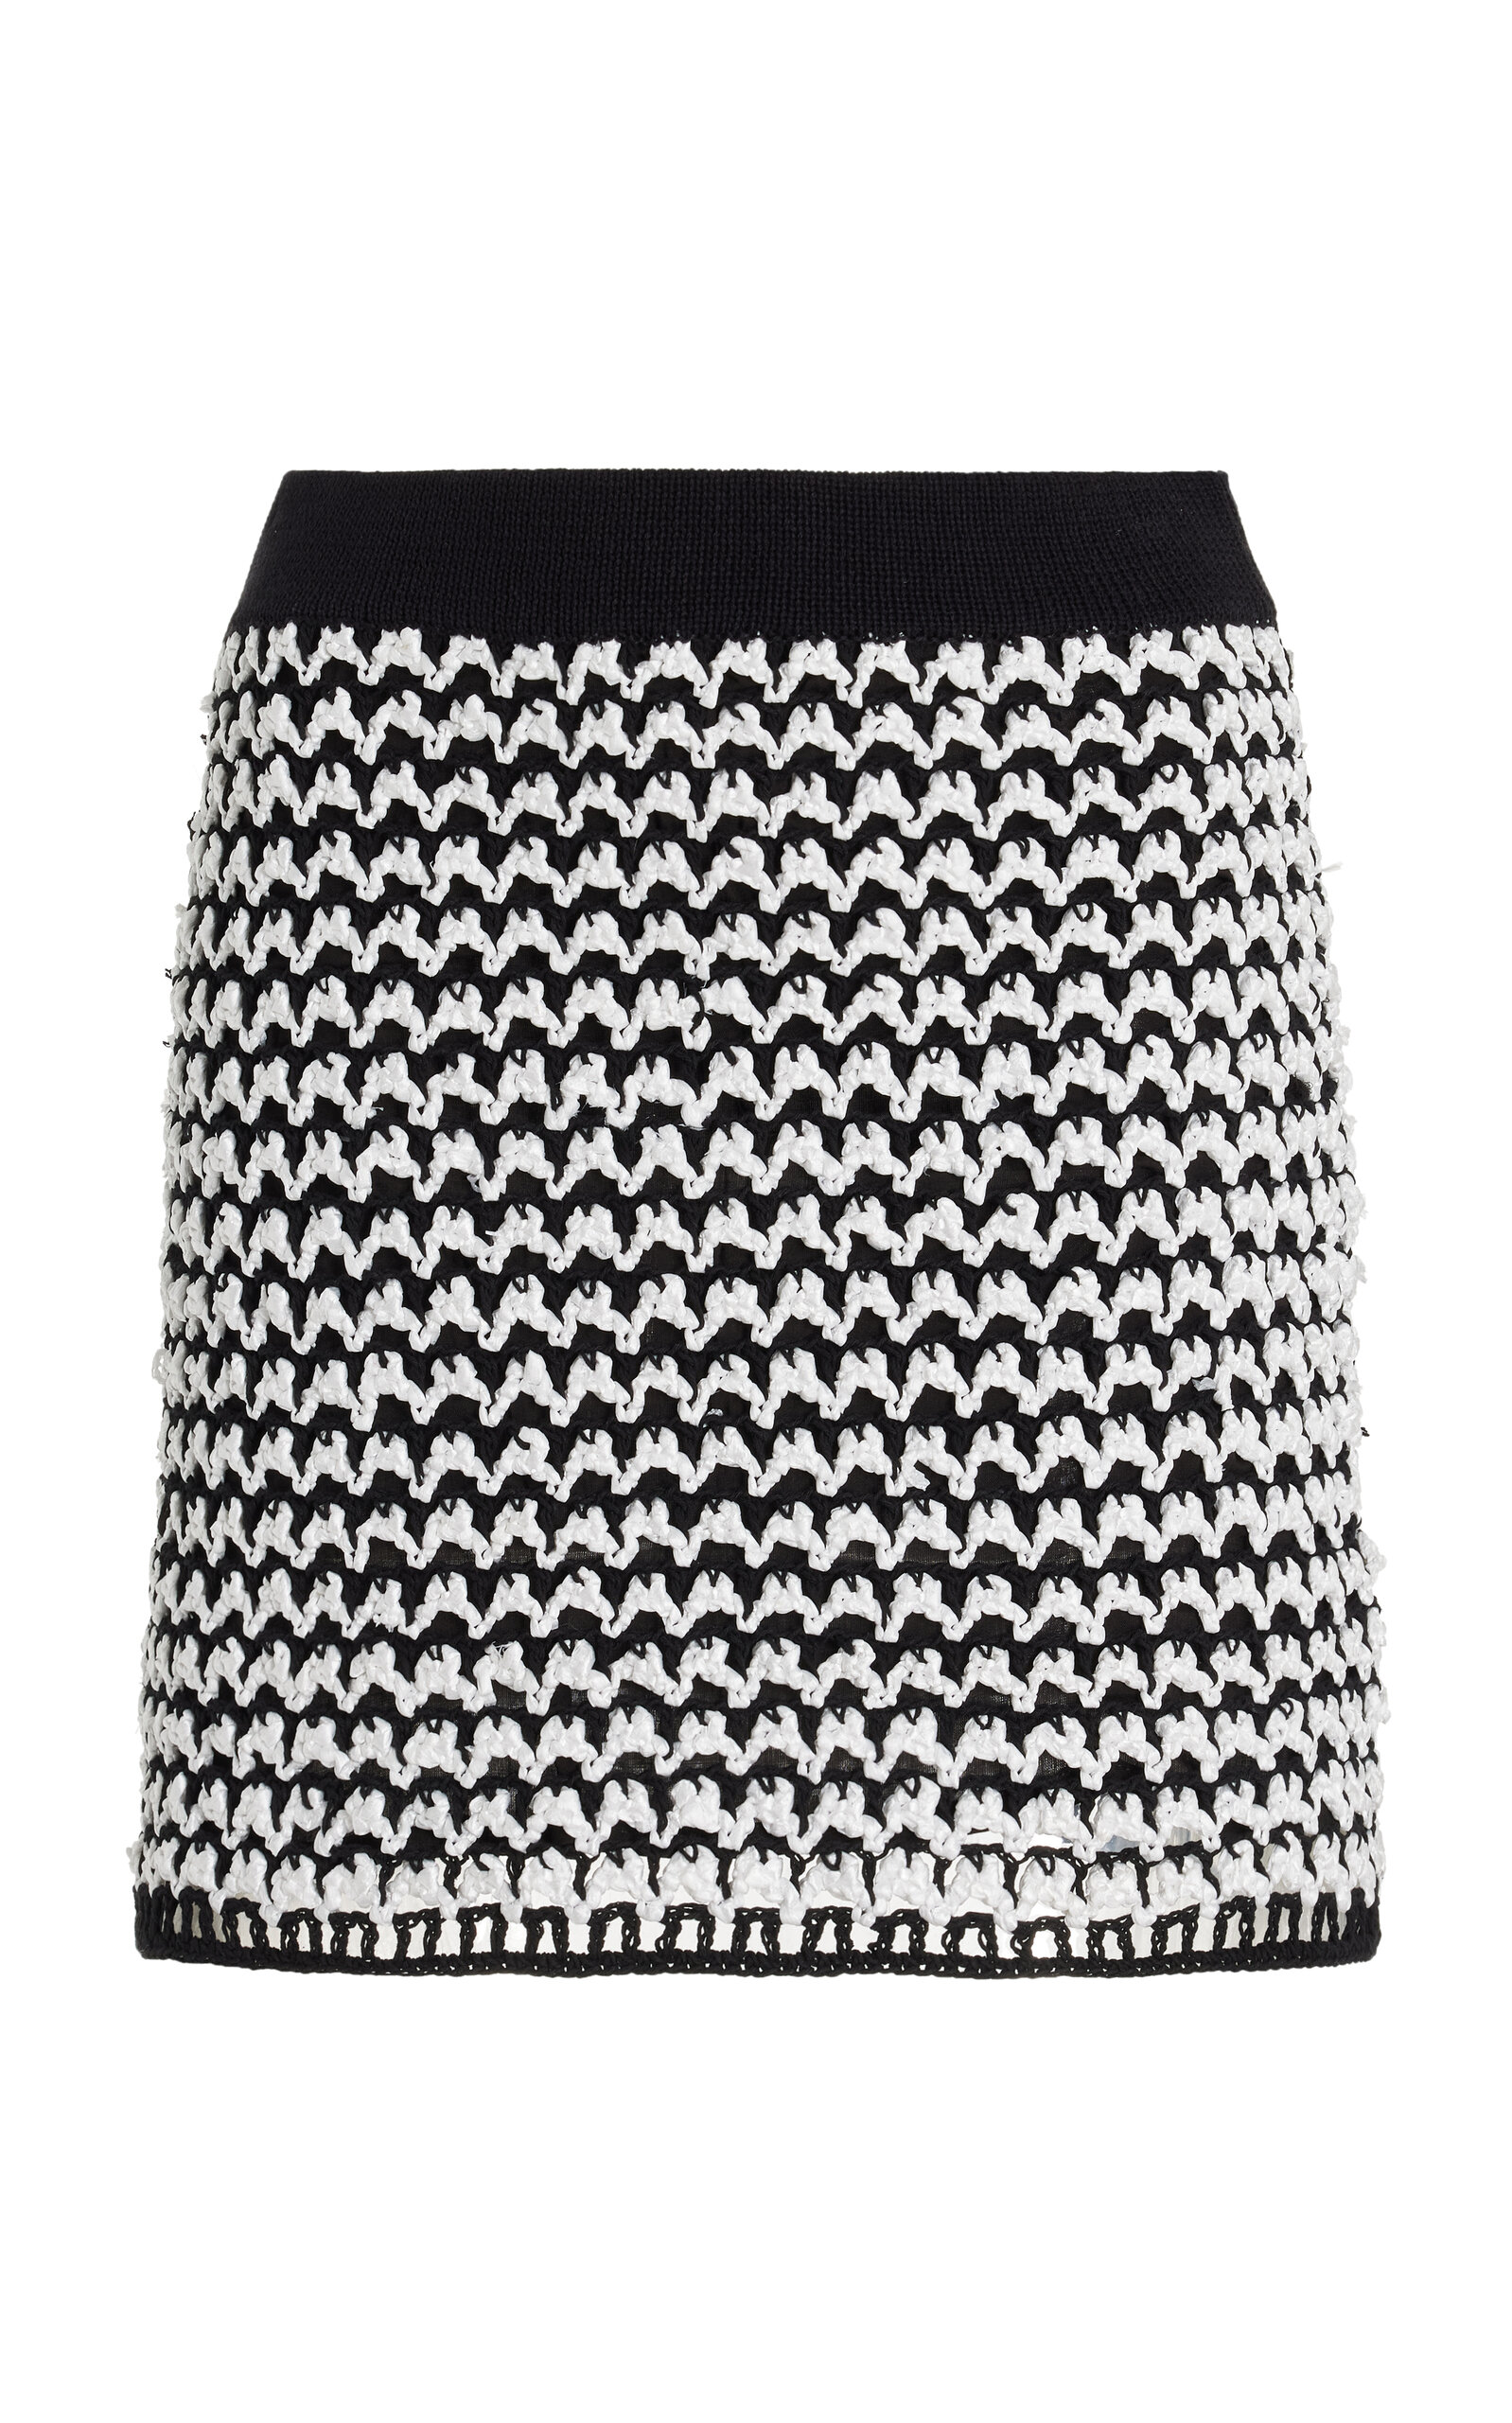 Dillon Crocheted Cotton Mini Skirt